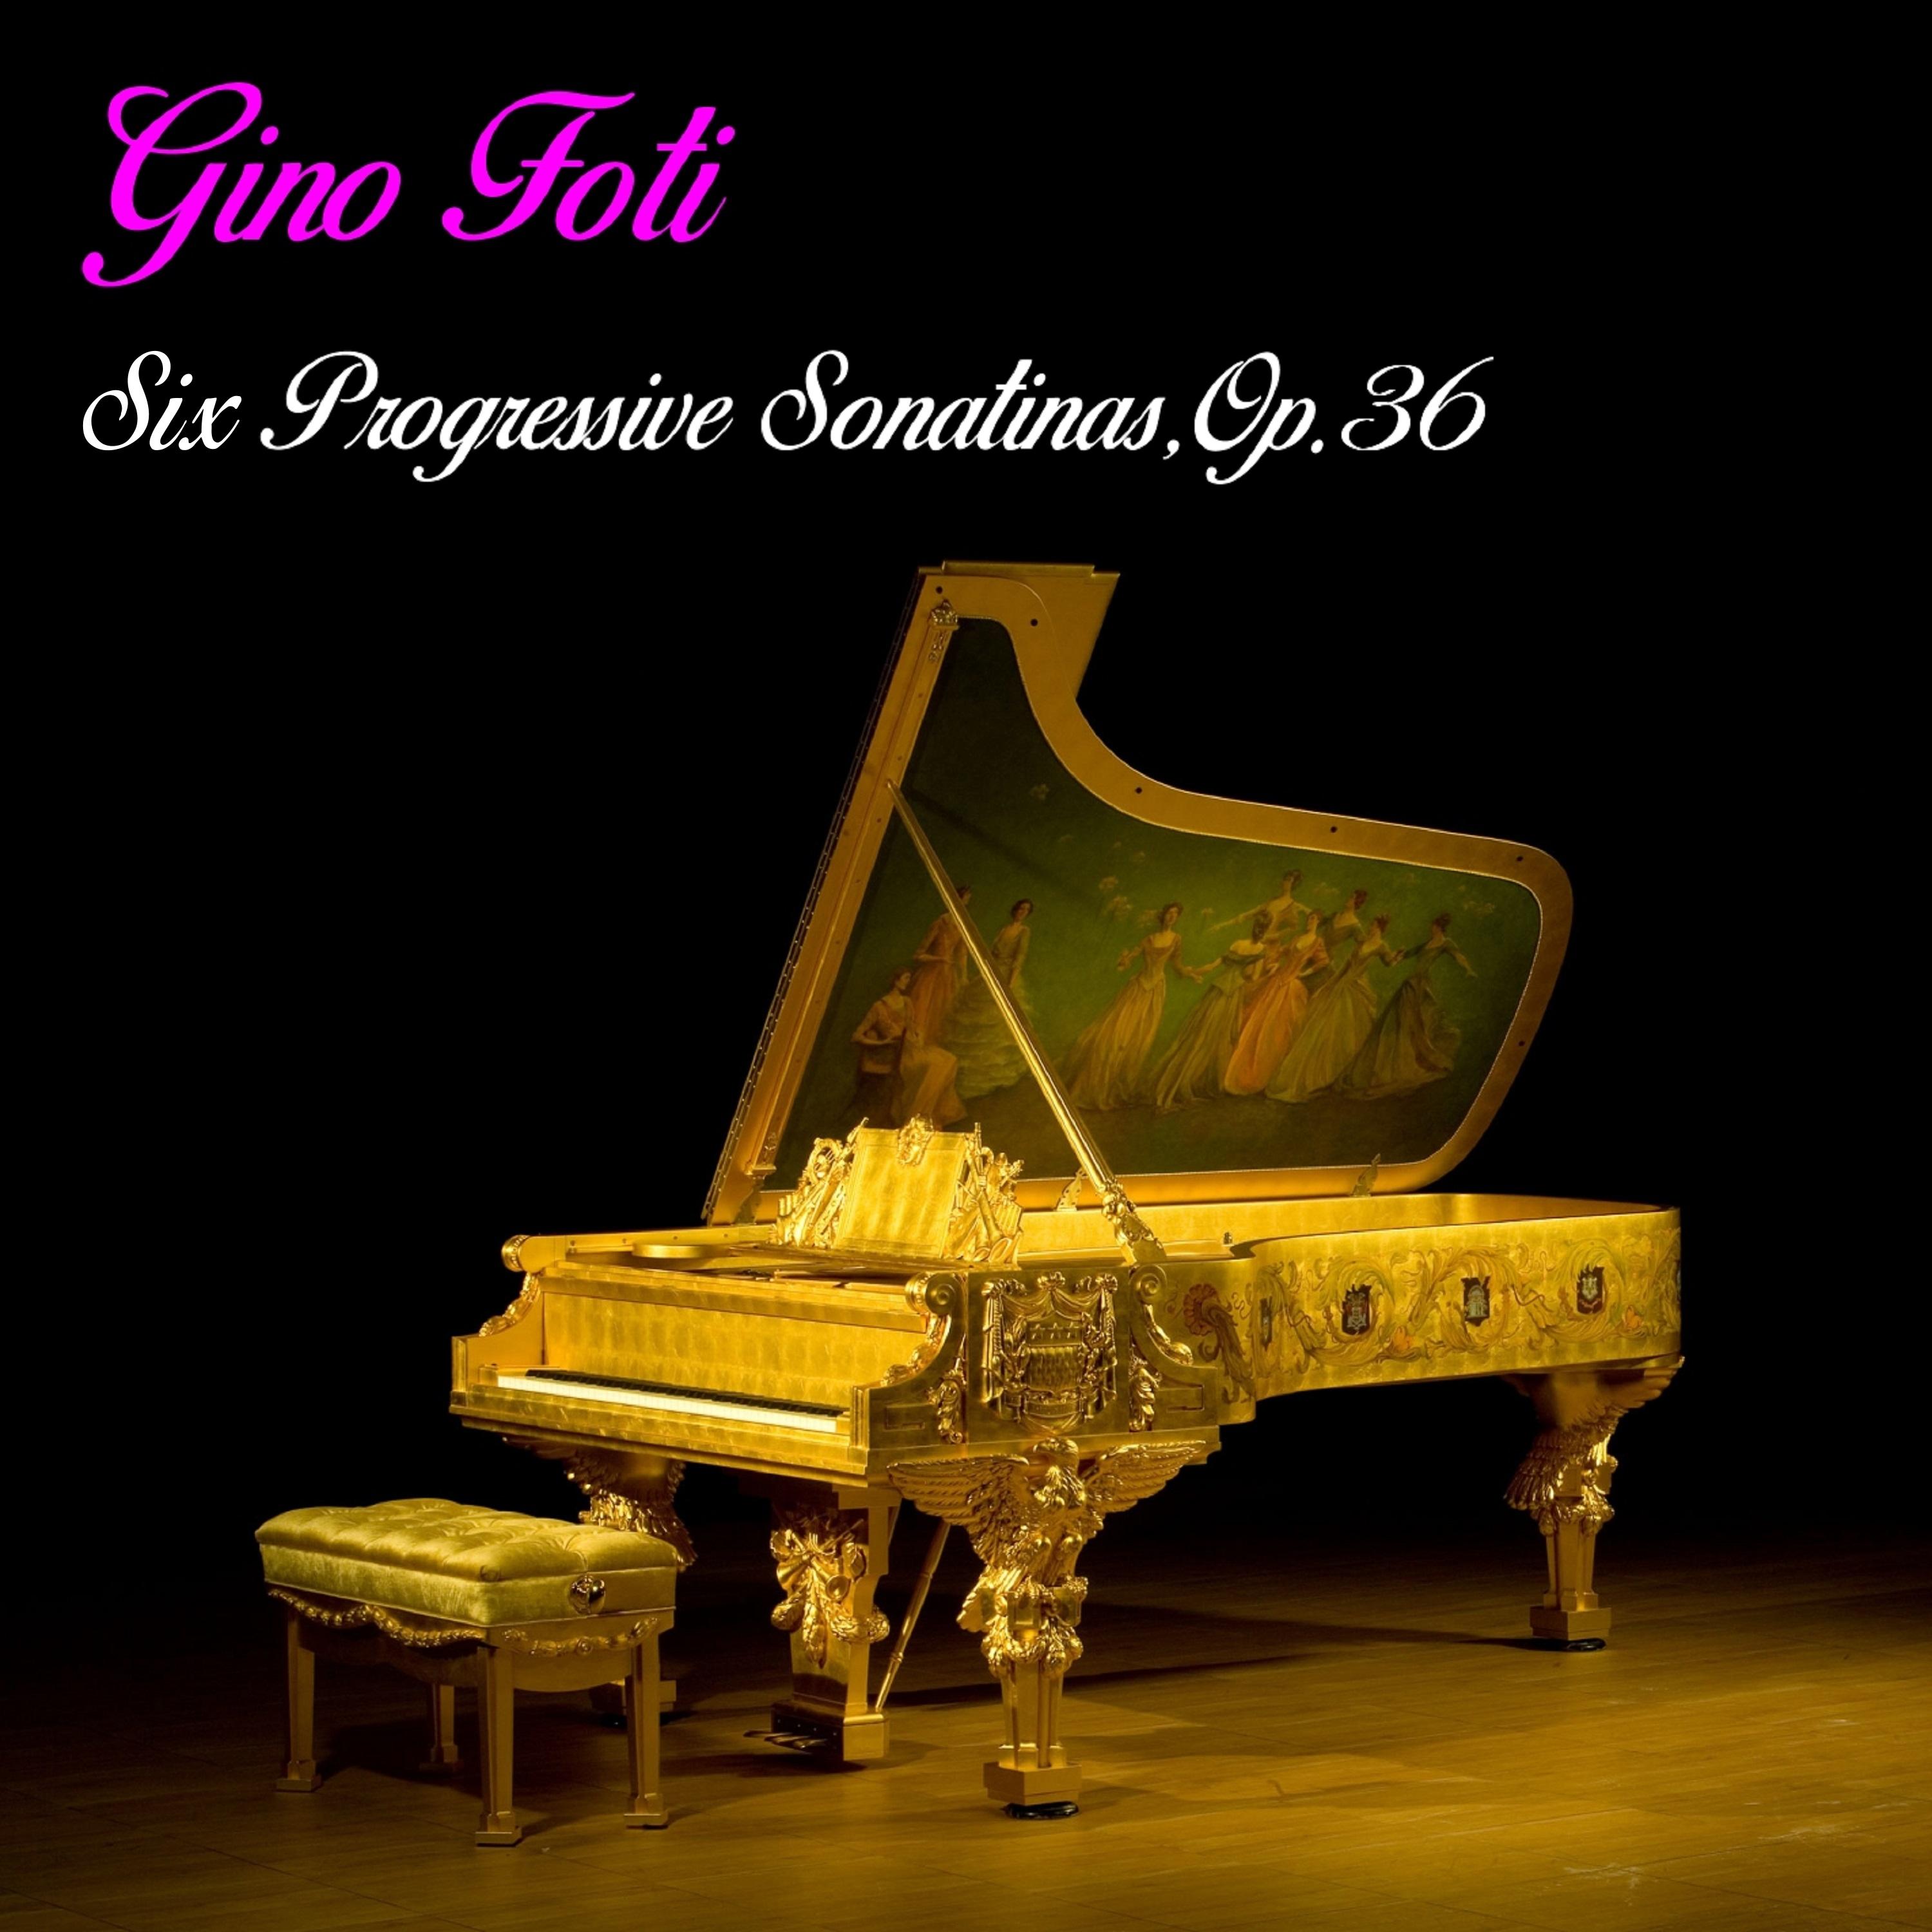 Gino Foti - Six Sonatinas for Pianoforte, No. 2 in G Major, Op. 36: III. Allegro